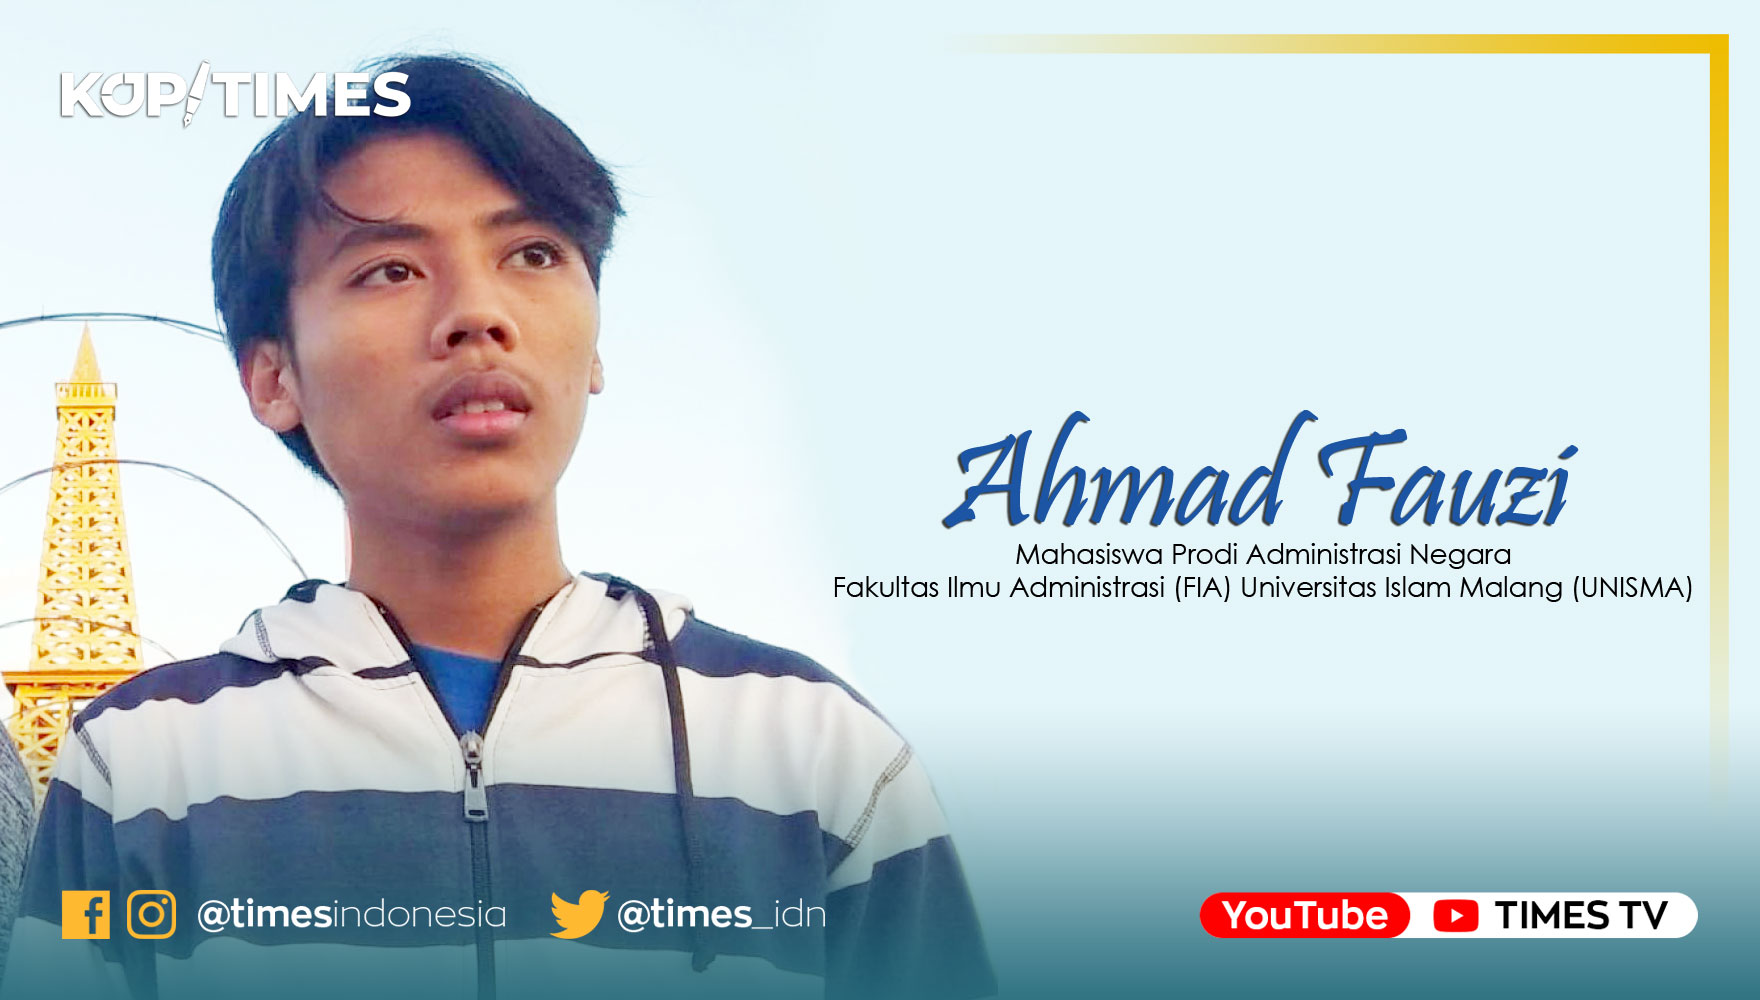 Ahmad Fauzi, Mahasiswa Prodi Administrasi Negara Fakultas Ilmu Administrasi (FIA) Universitas Islam Malang (UNISMA).